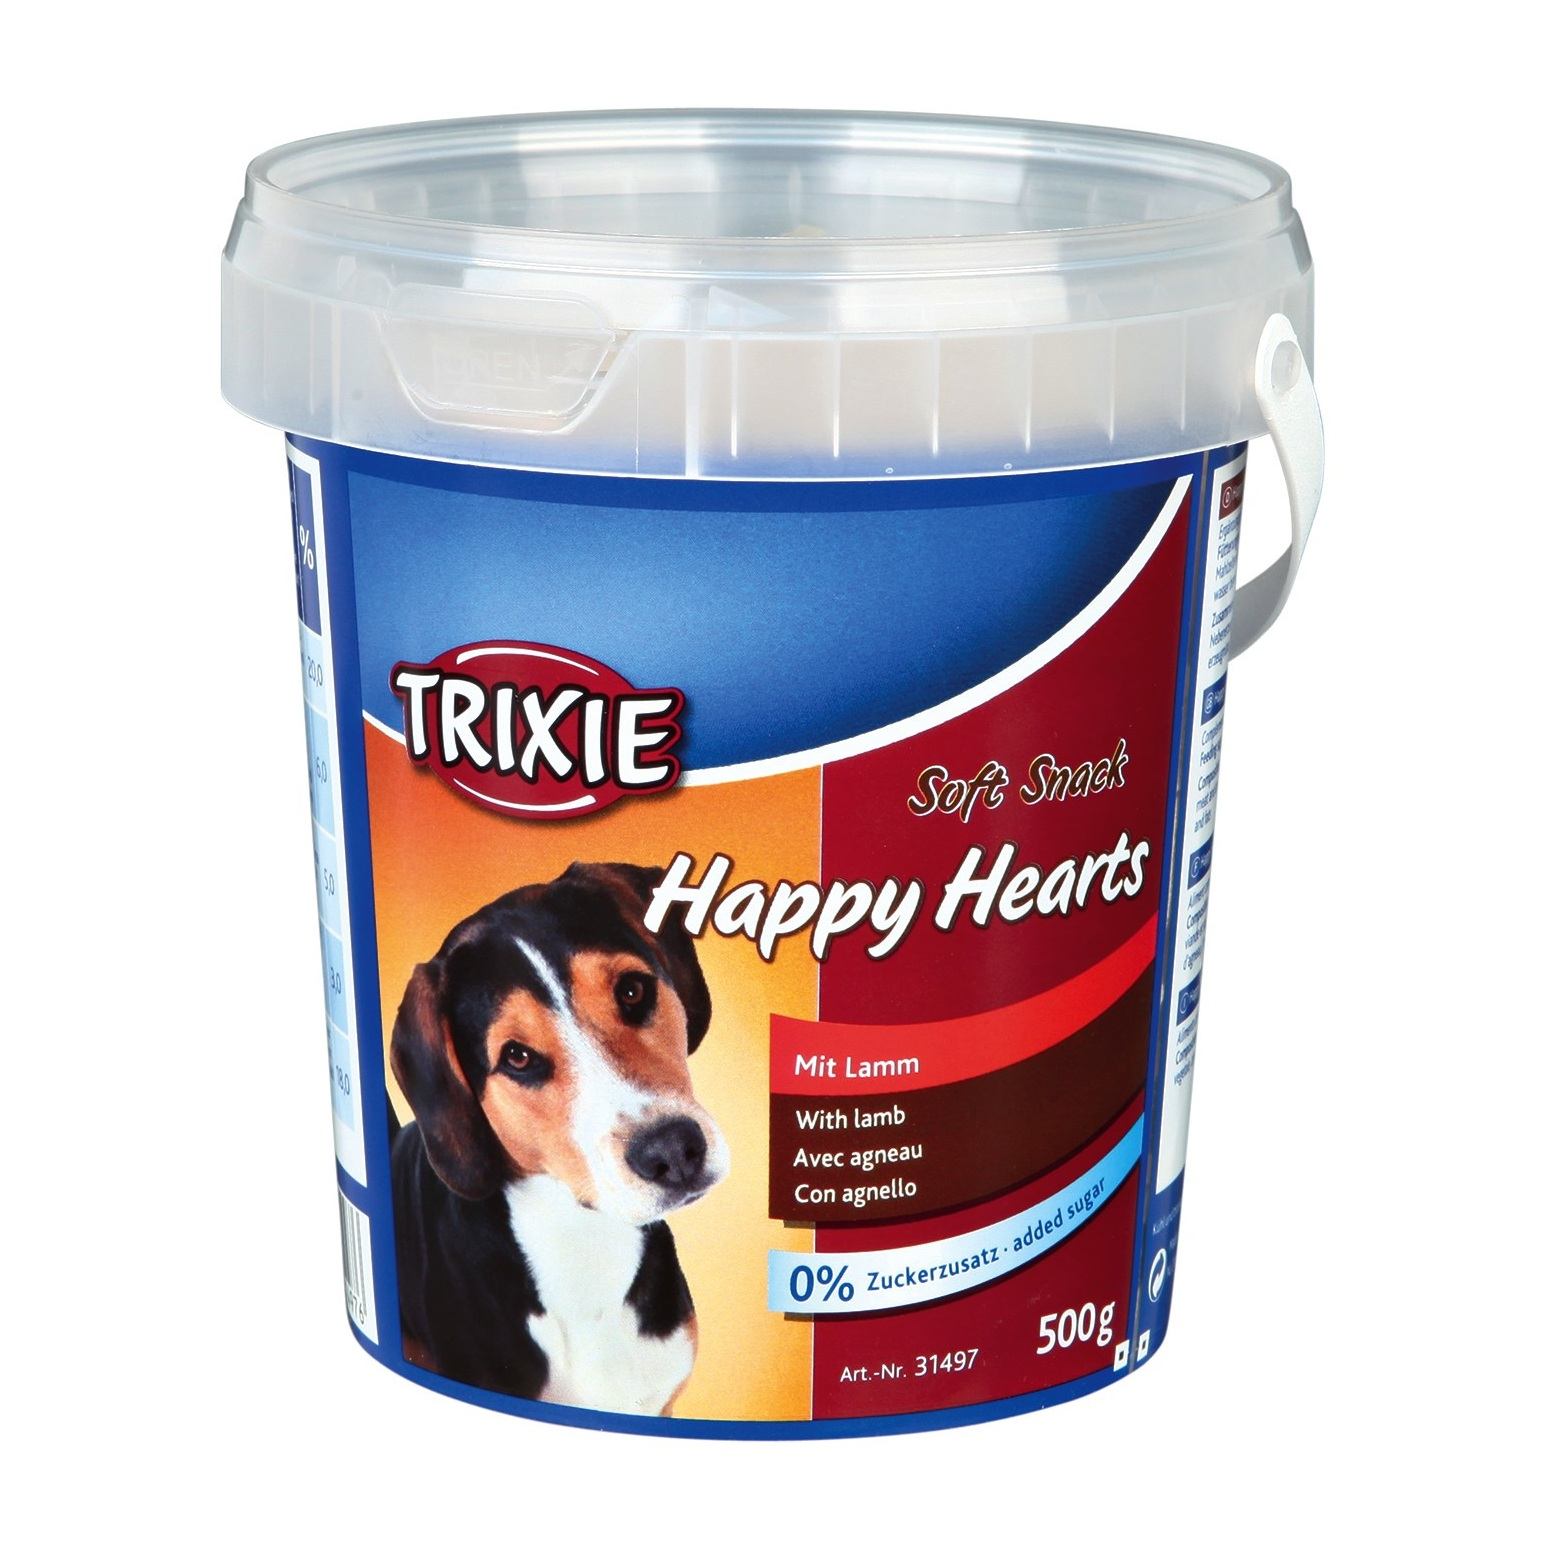 

Ведро лакомств для собак Trixie «Happy Hearts» 500 г (ягнёнок)